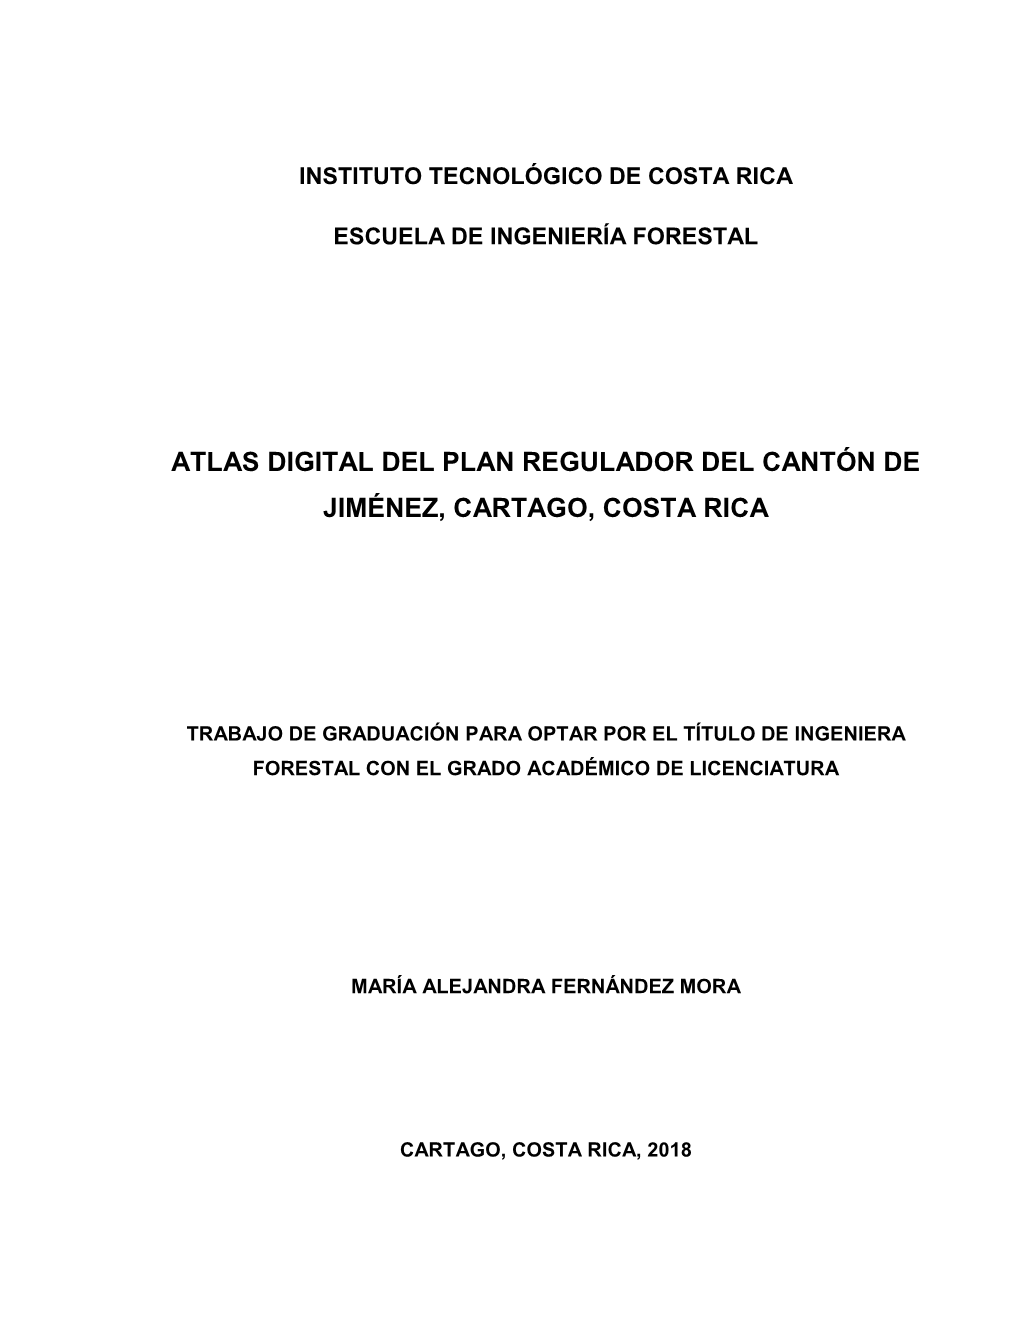 Atlas Digital Del Plan Regulador Del Cantón De Jiménez, Cartago, Costa Rica